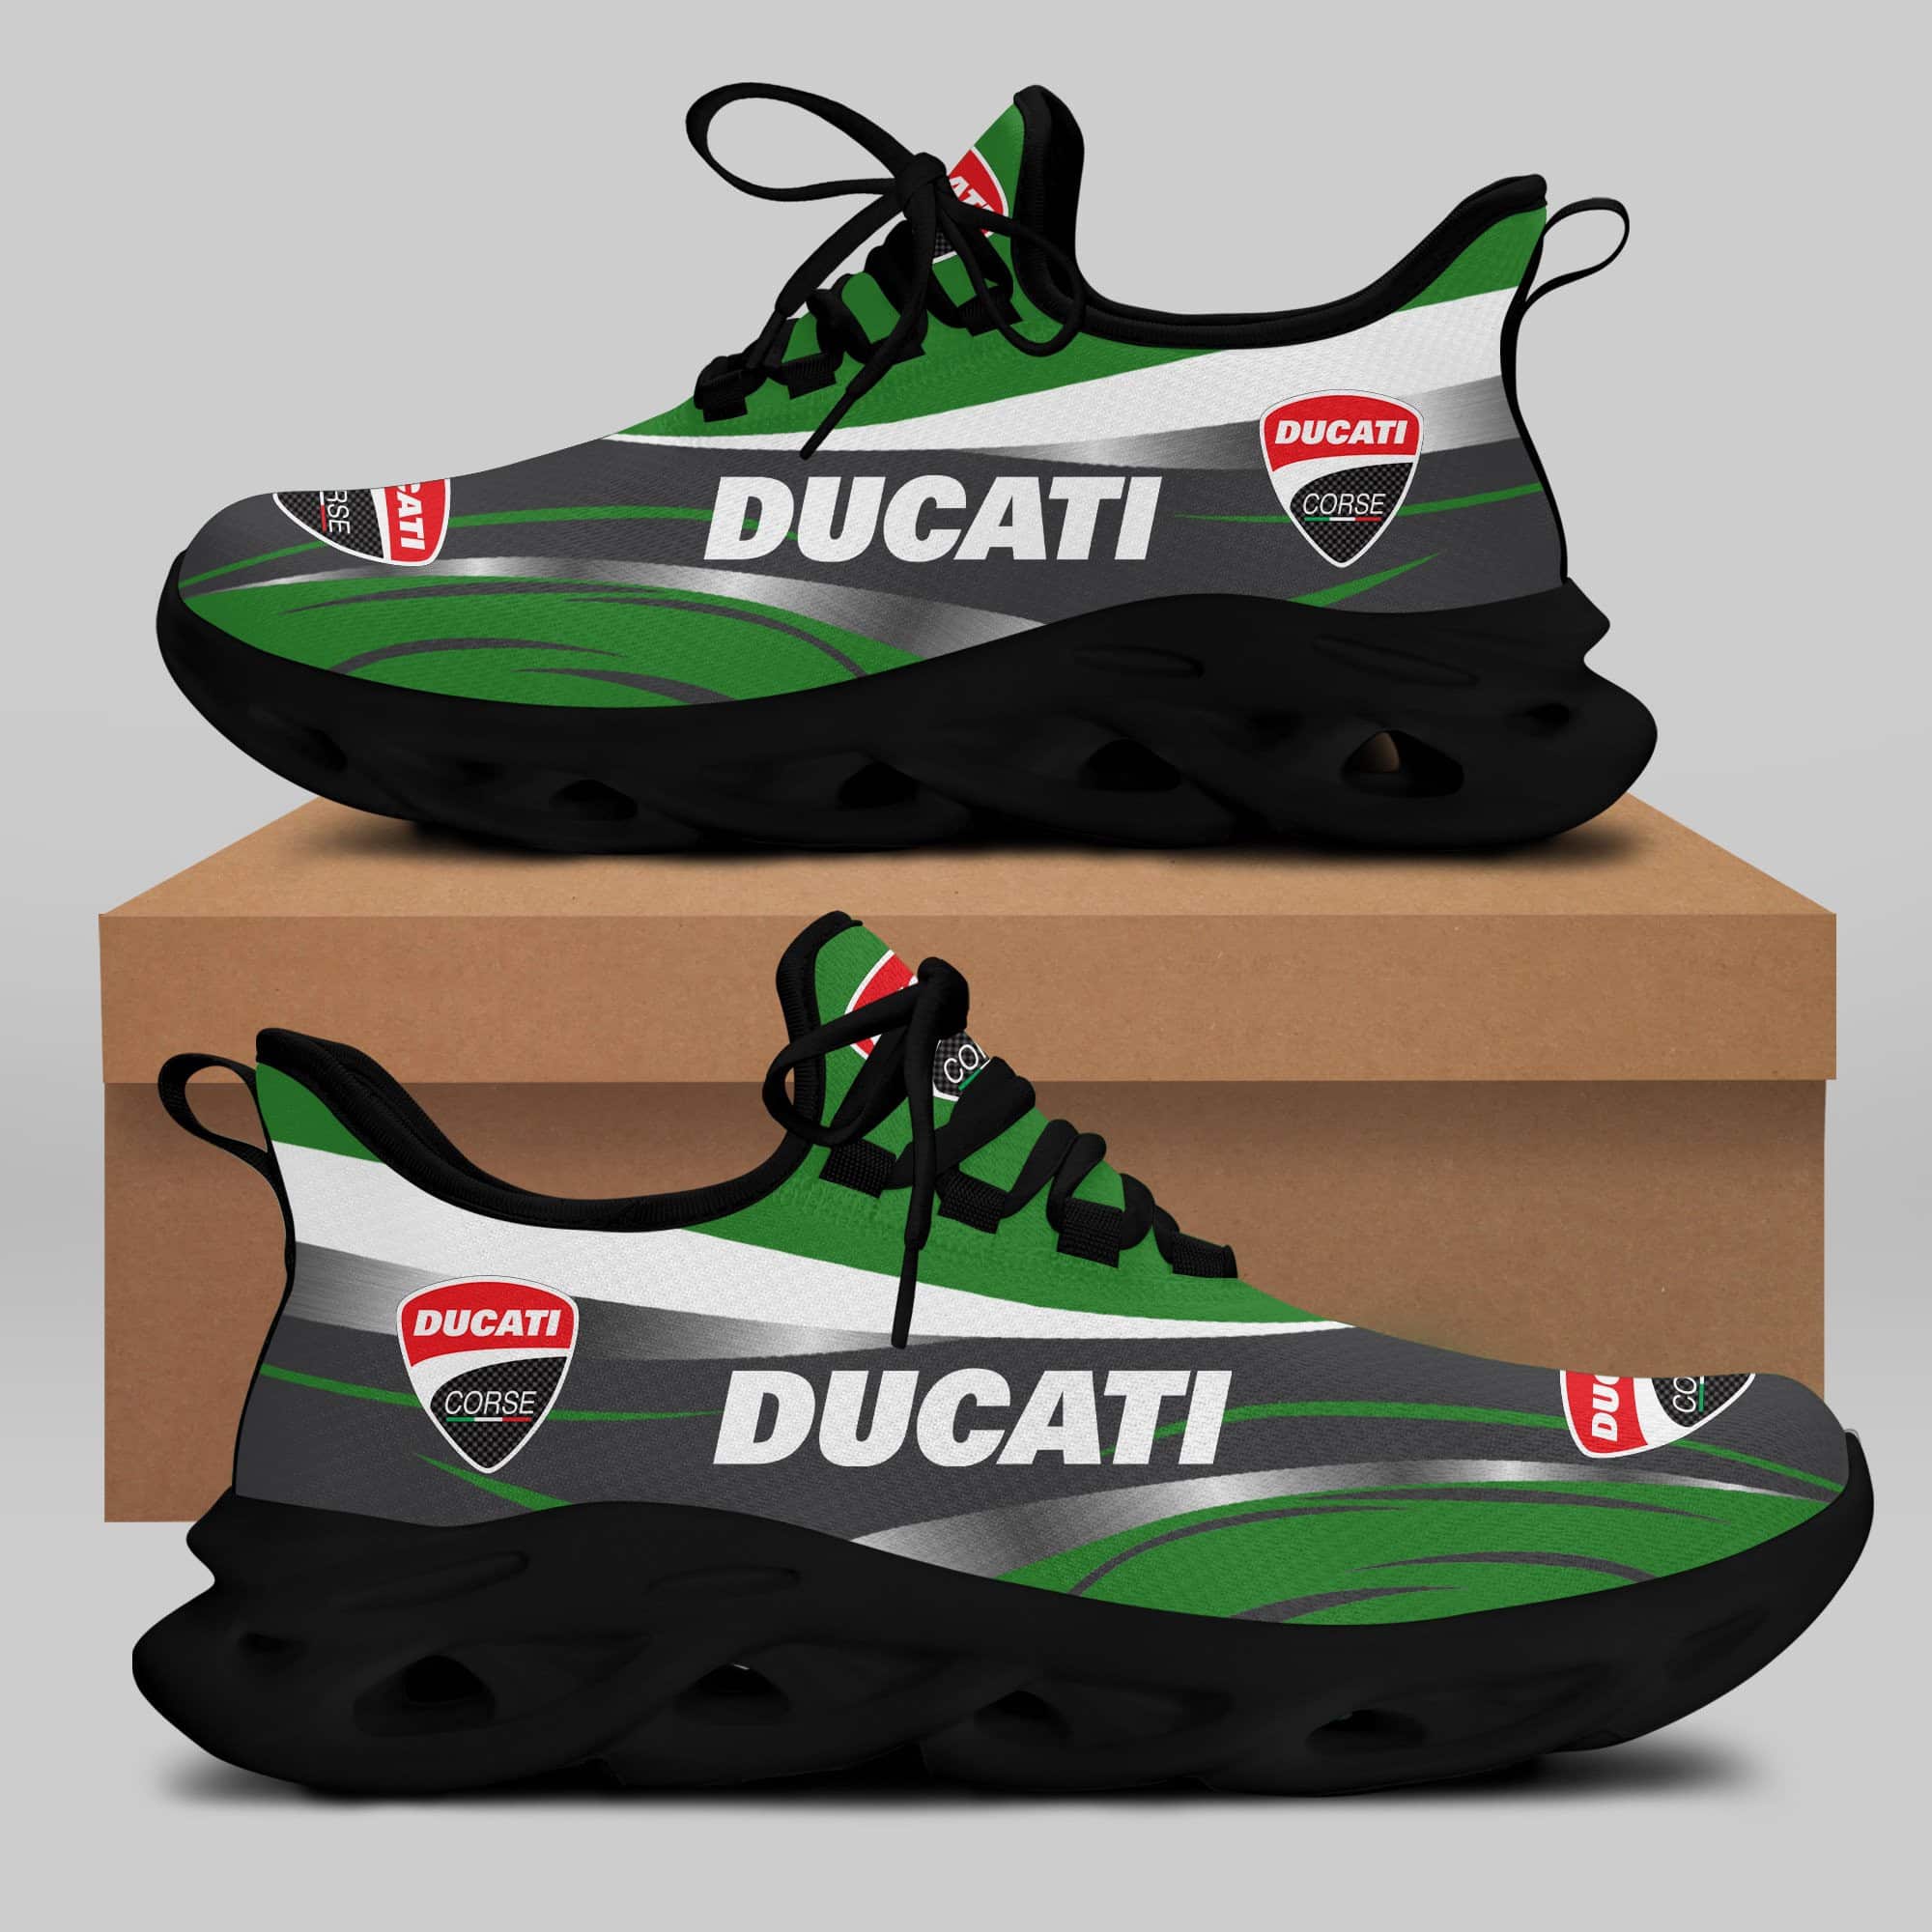 Ducati Racing Running Shoes Max Soul Shoes Sneakers Ver 54 2